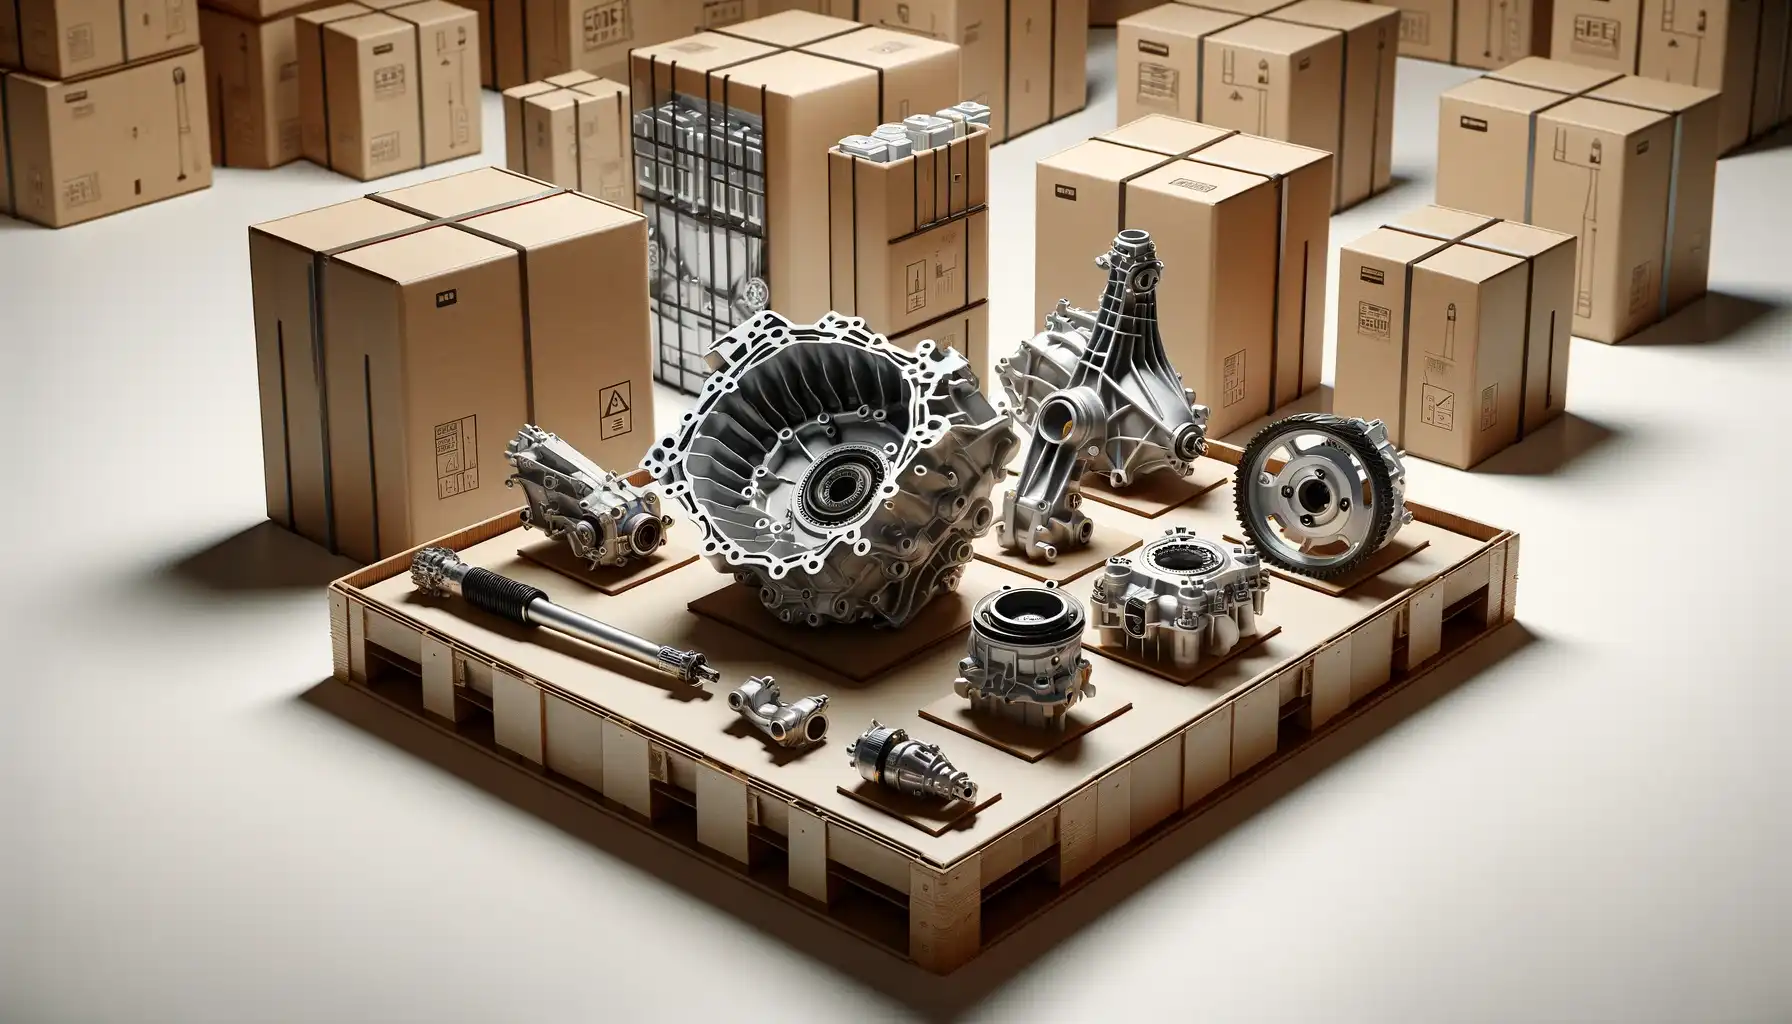 automotive parts in a storage box